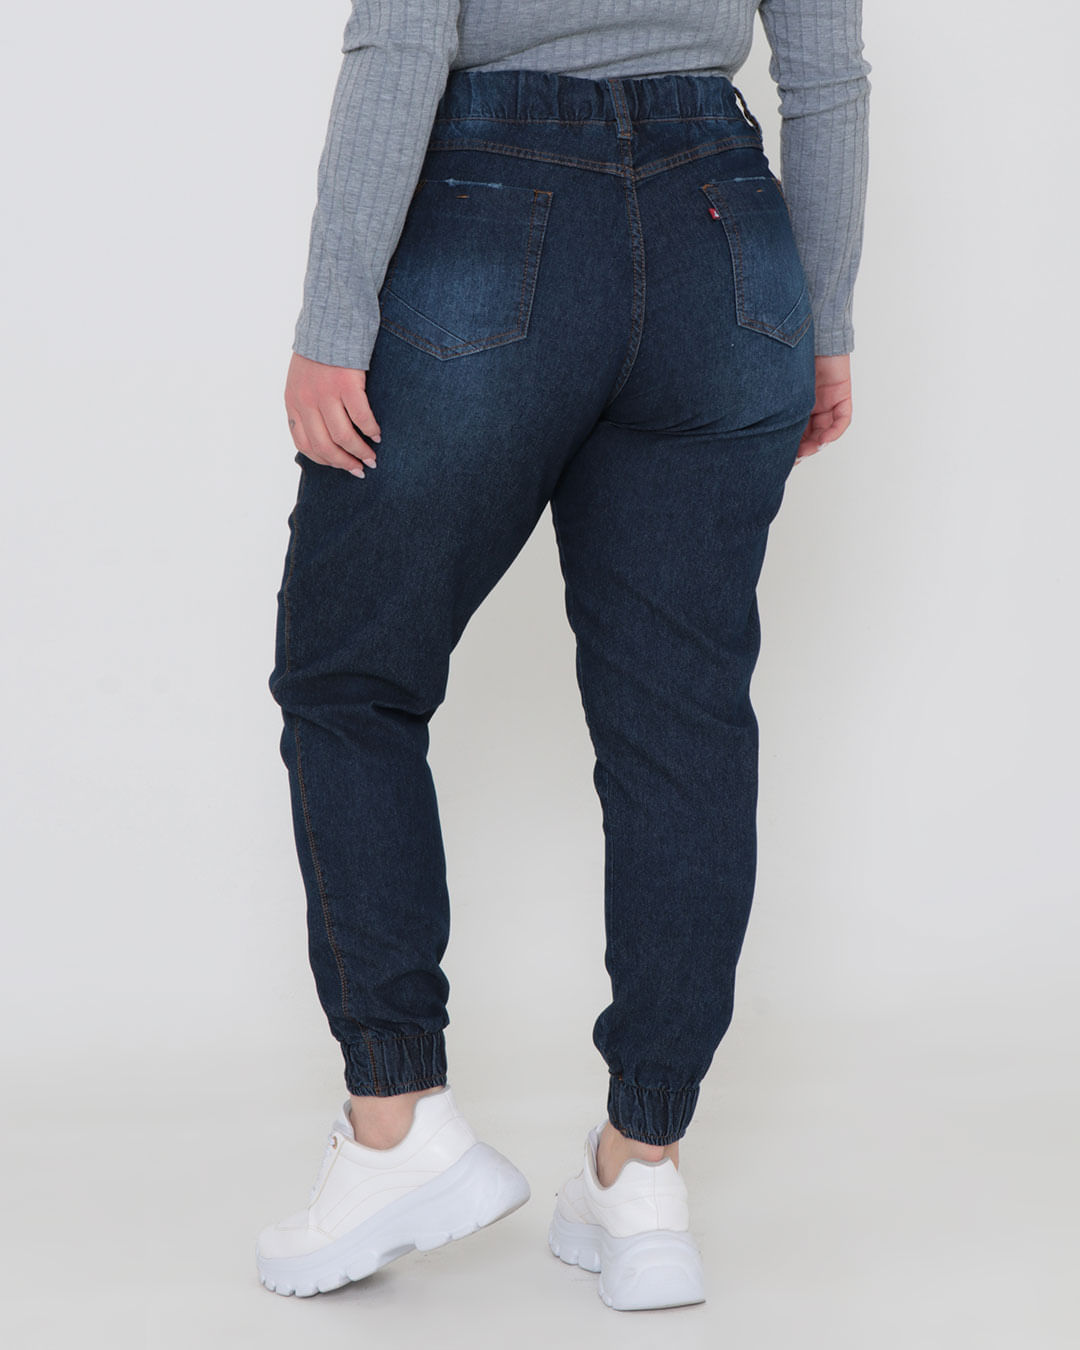 Calca-Jeans-Plus-Size-Jogger-Cordao-Denim-Azul-Escuro